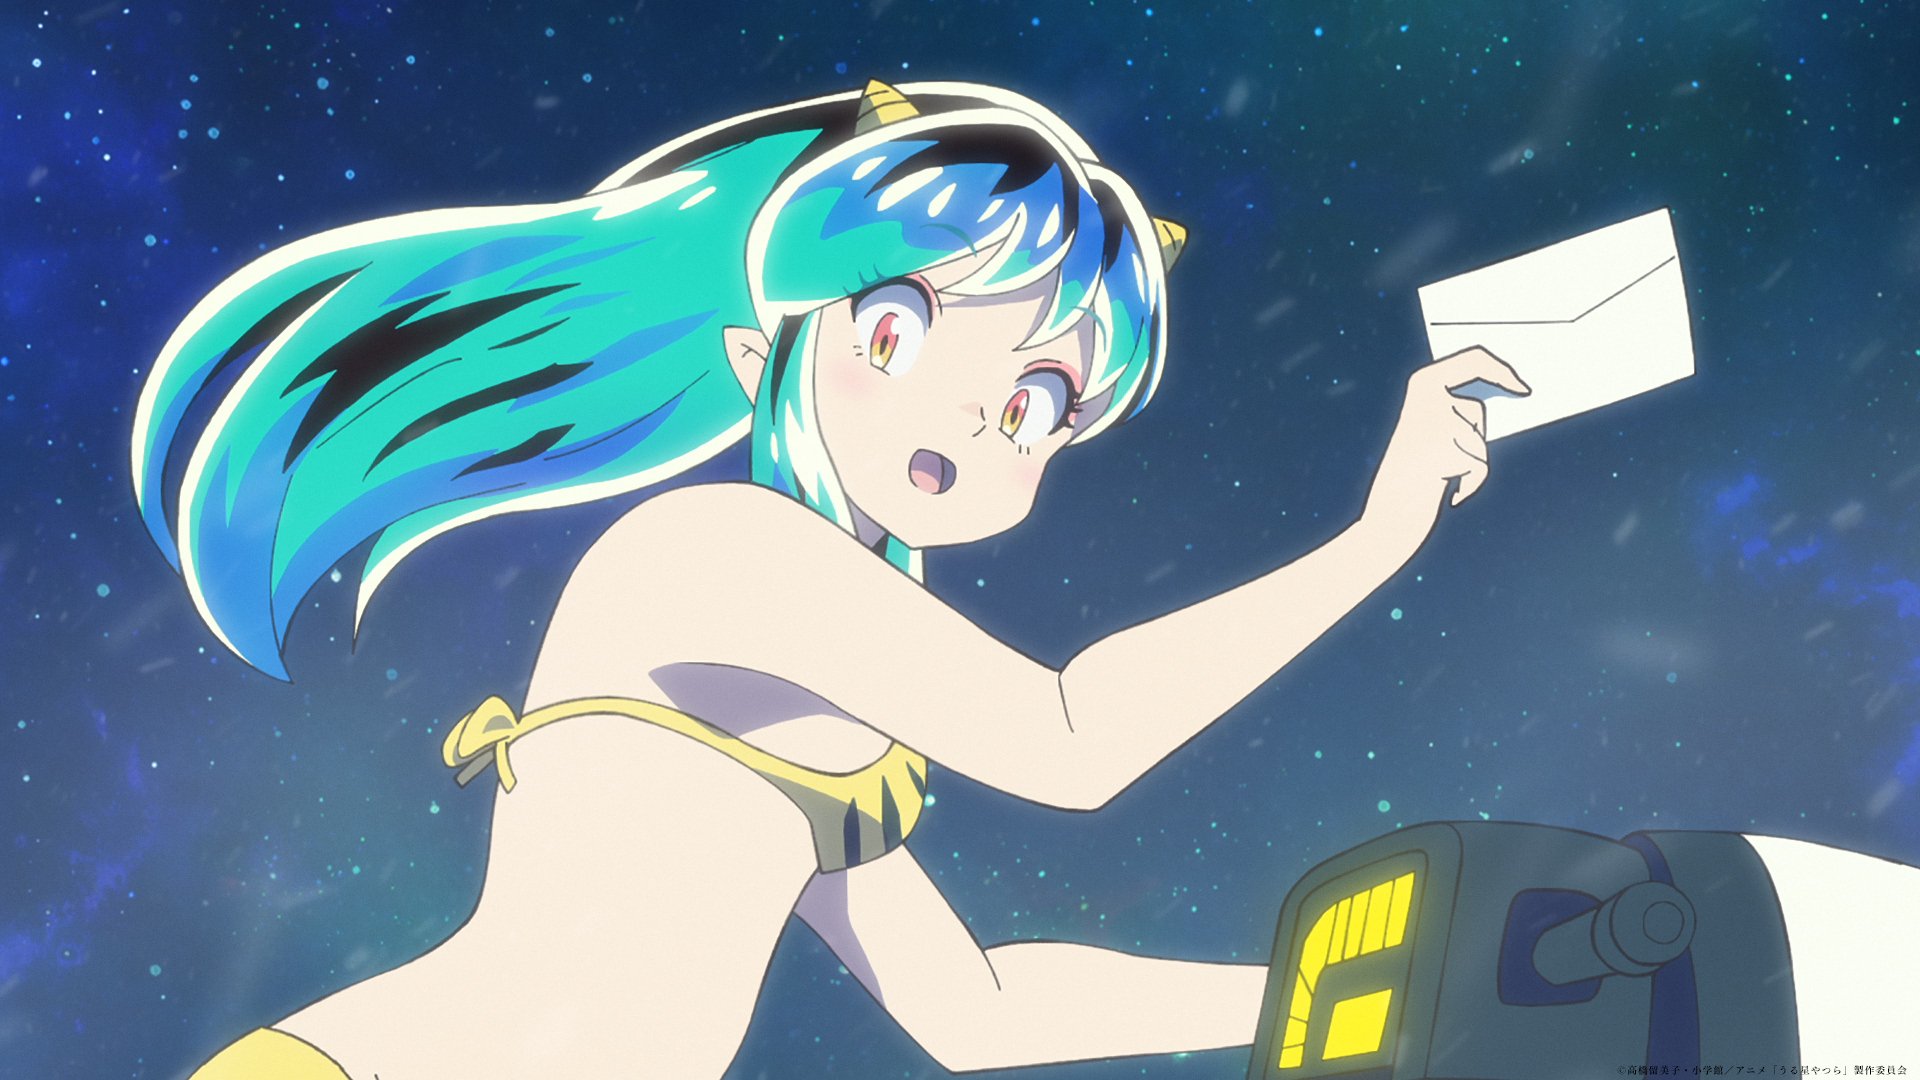 Urusei Yatsura anime header, depicting Lum holding a closed envelope